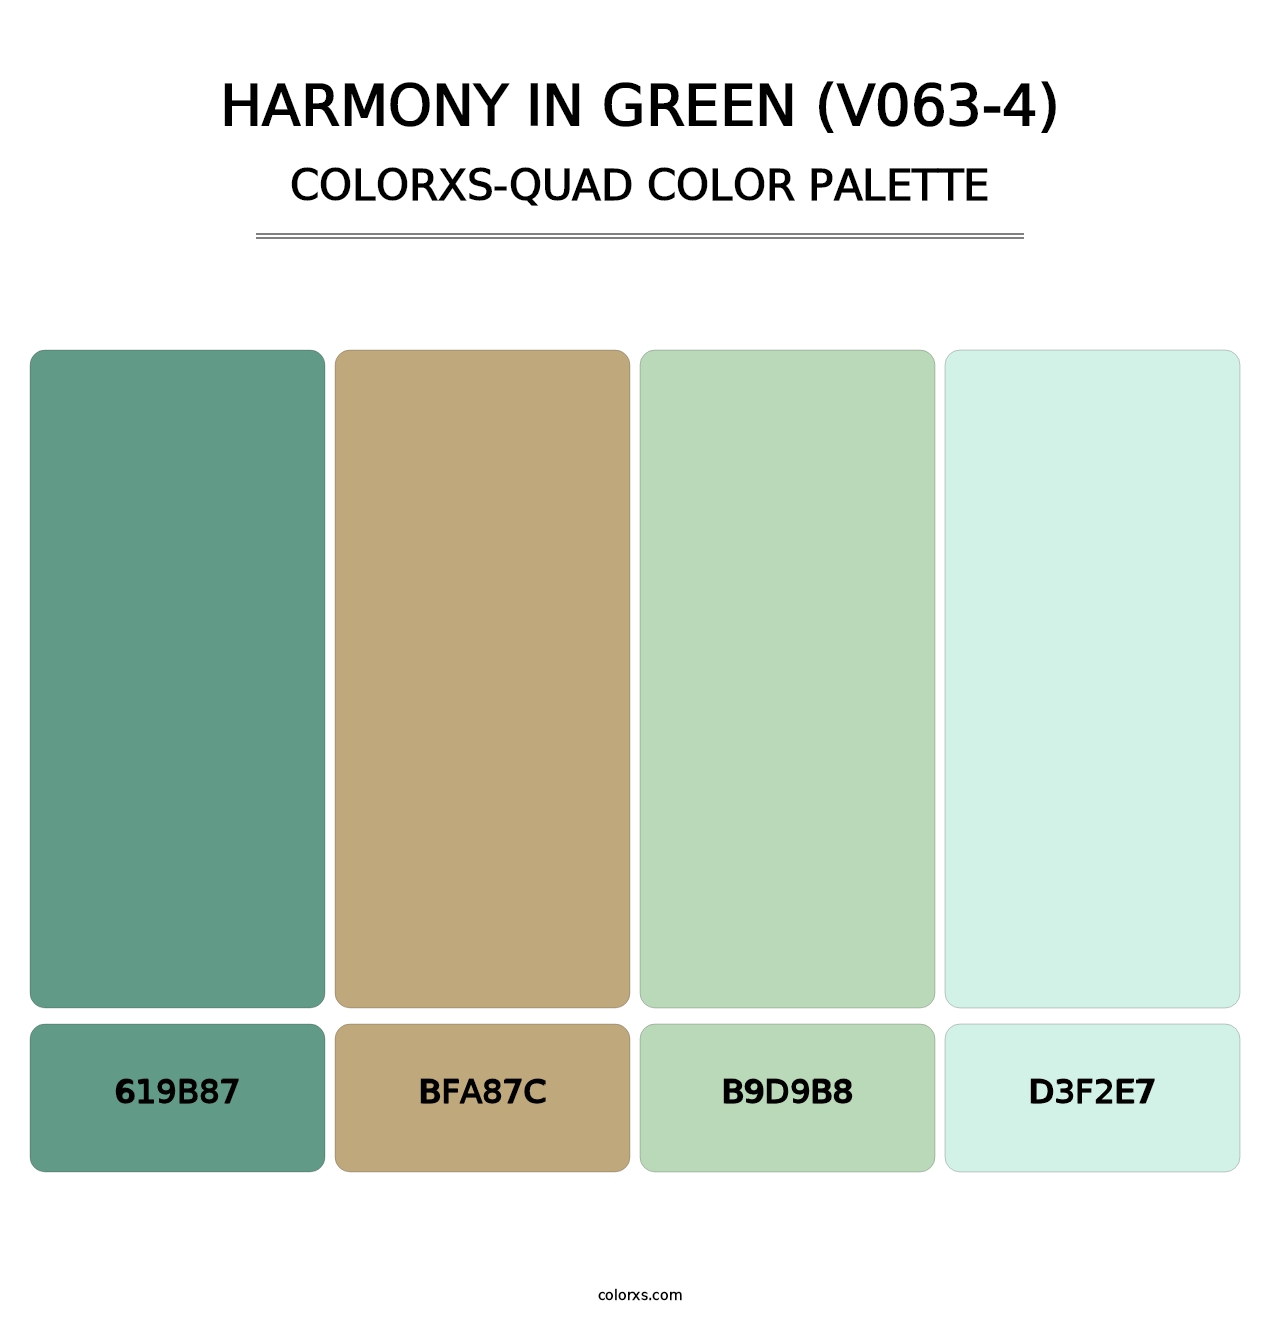 Harmony in Green (V063-4) - Colorxs Quad Palette